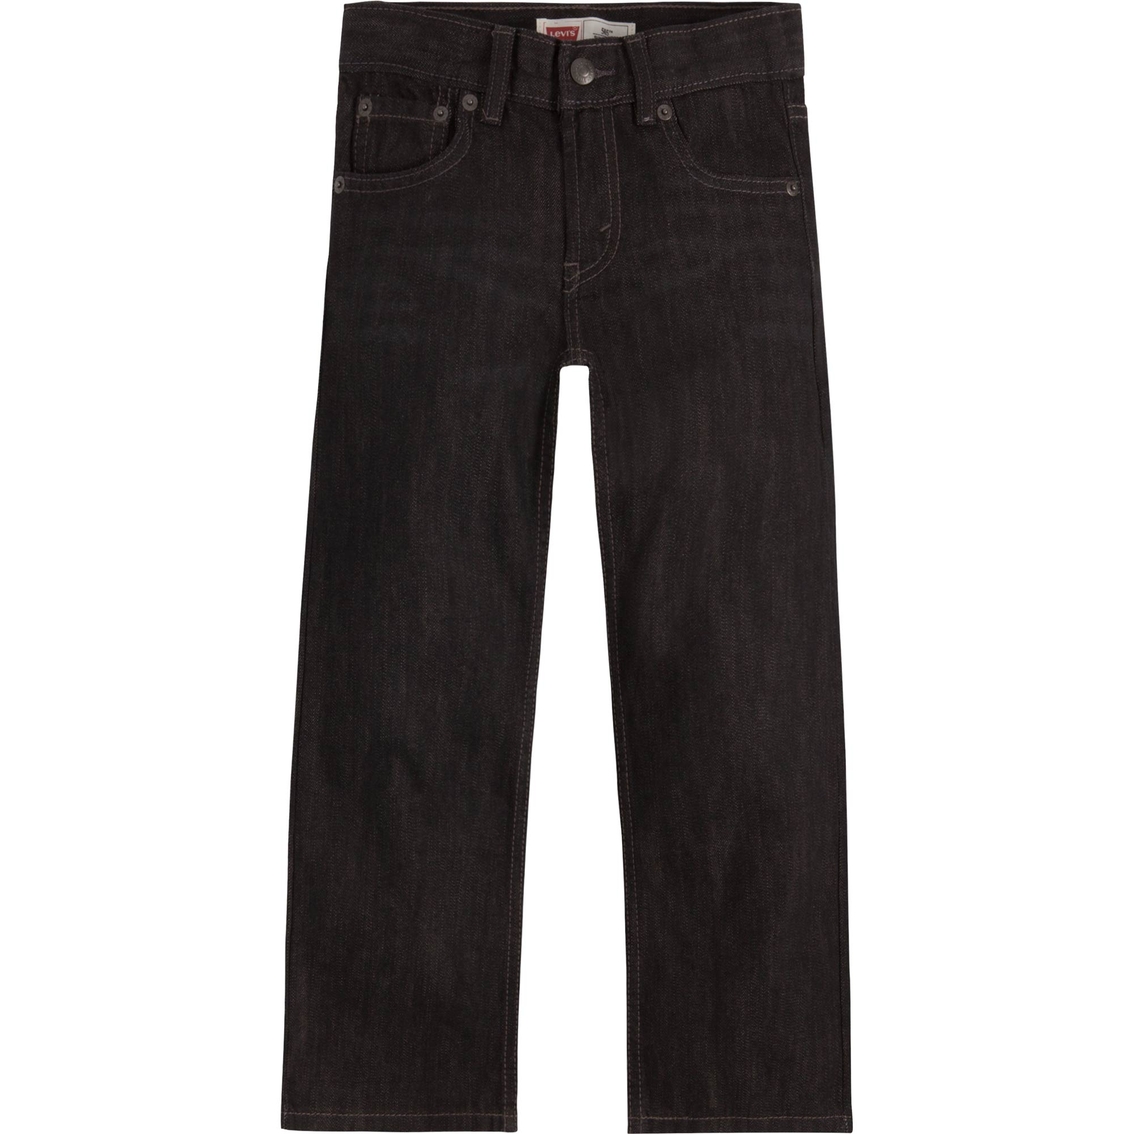 Levi's Little Boys 505 Regular Fit Jeans | Boys 4-7x | Clothing ...